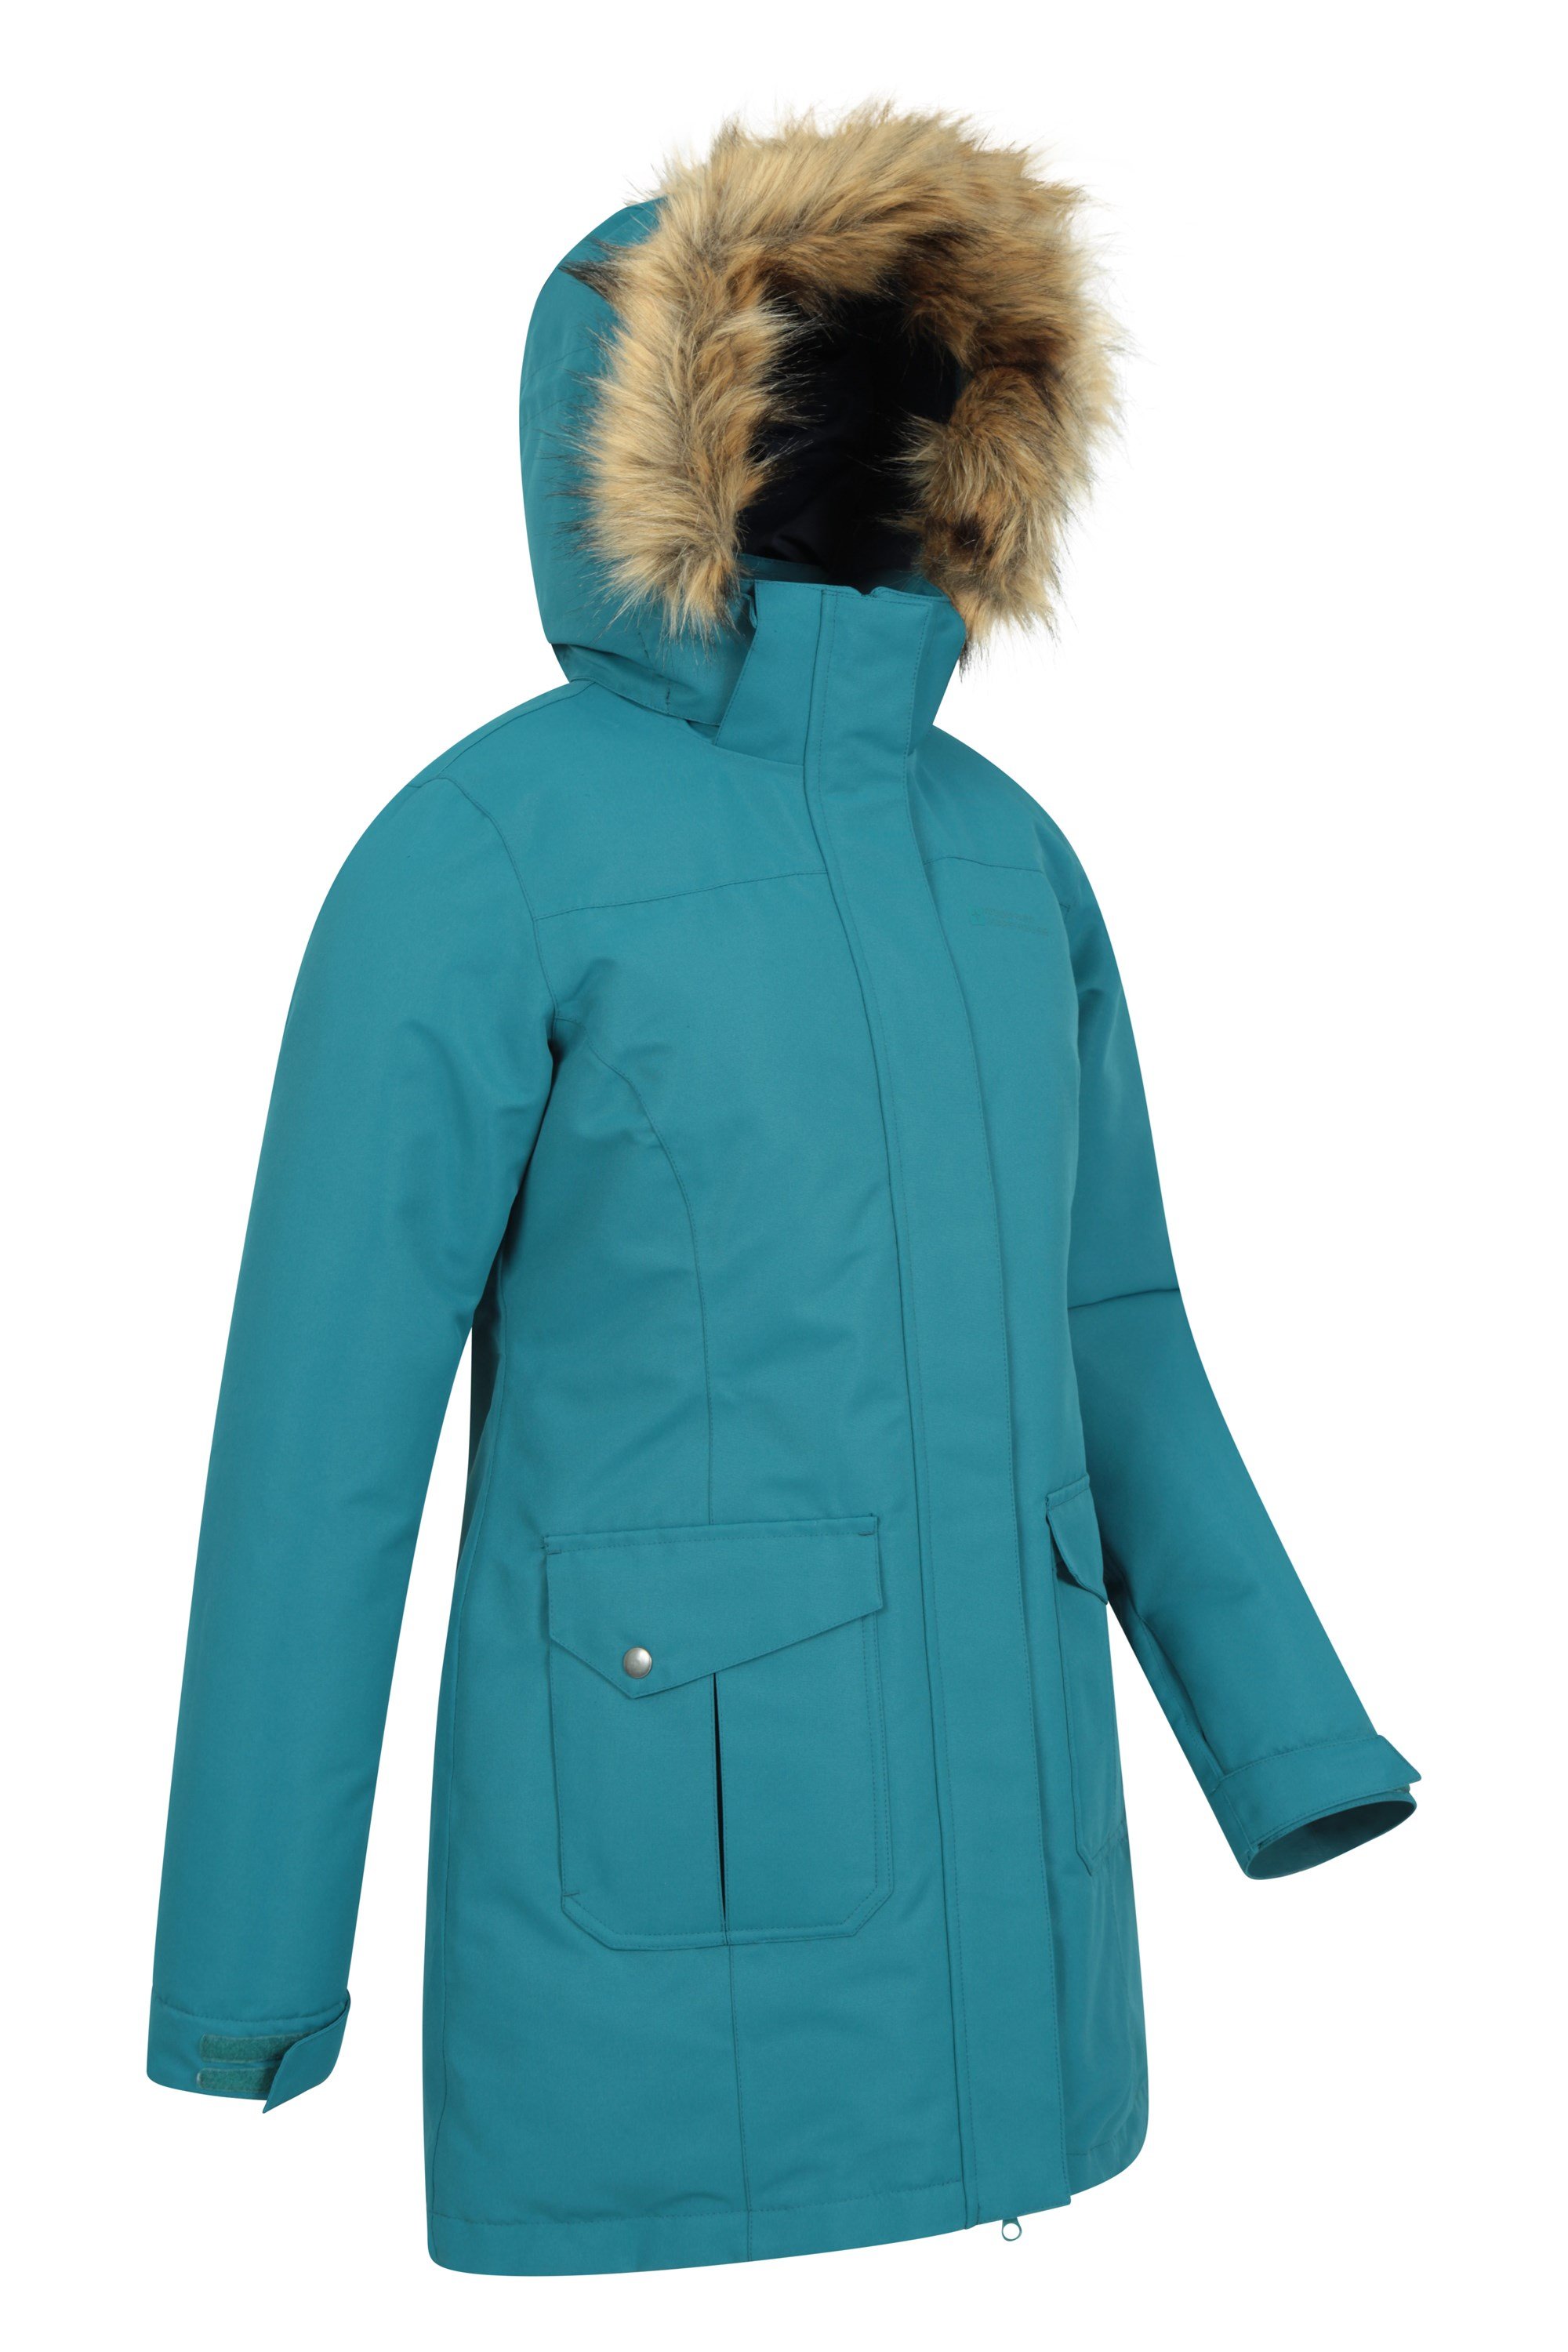 Mountain Warehouse Womens Long Parka Waterproof Jacket Insulated Ladies Coat 